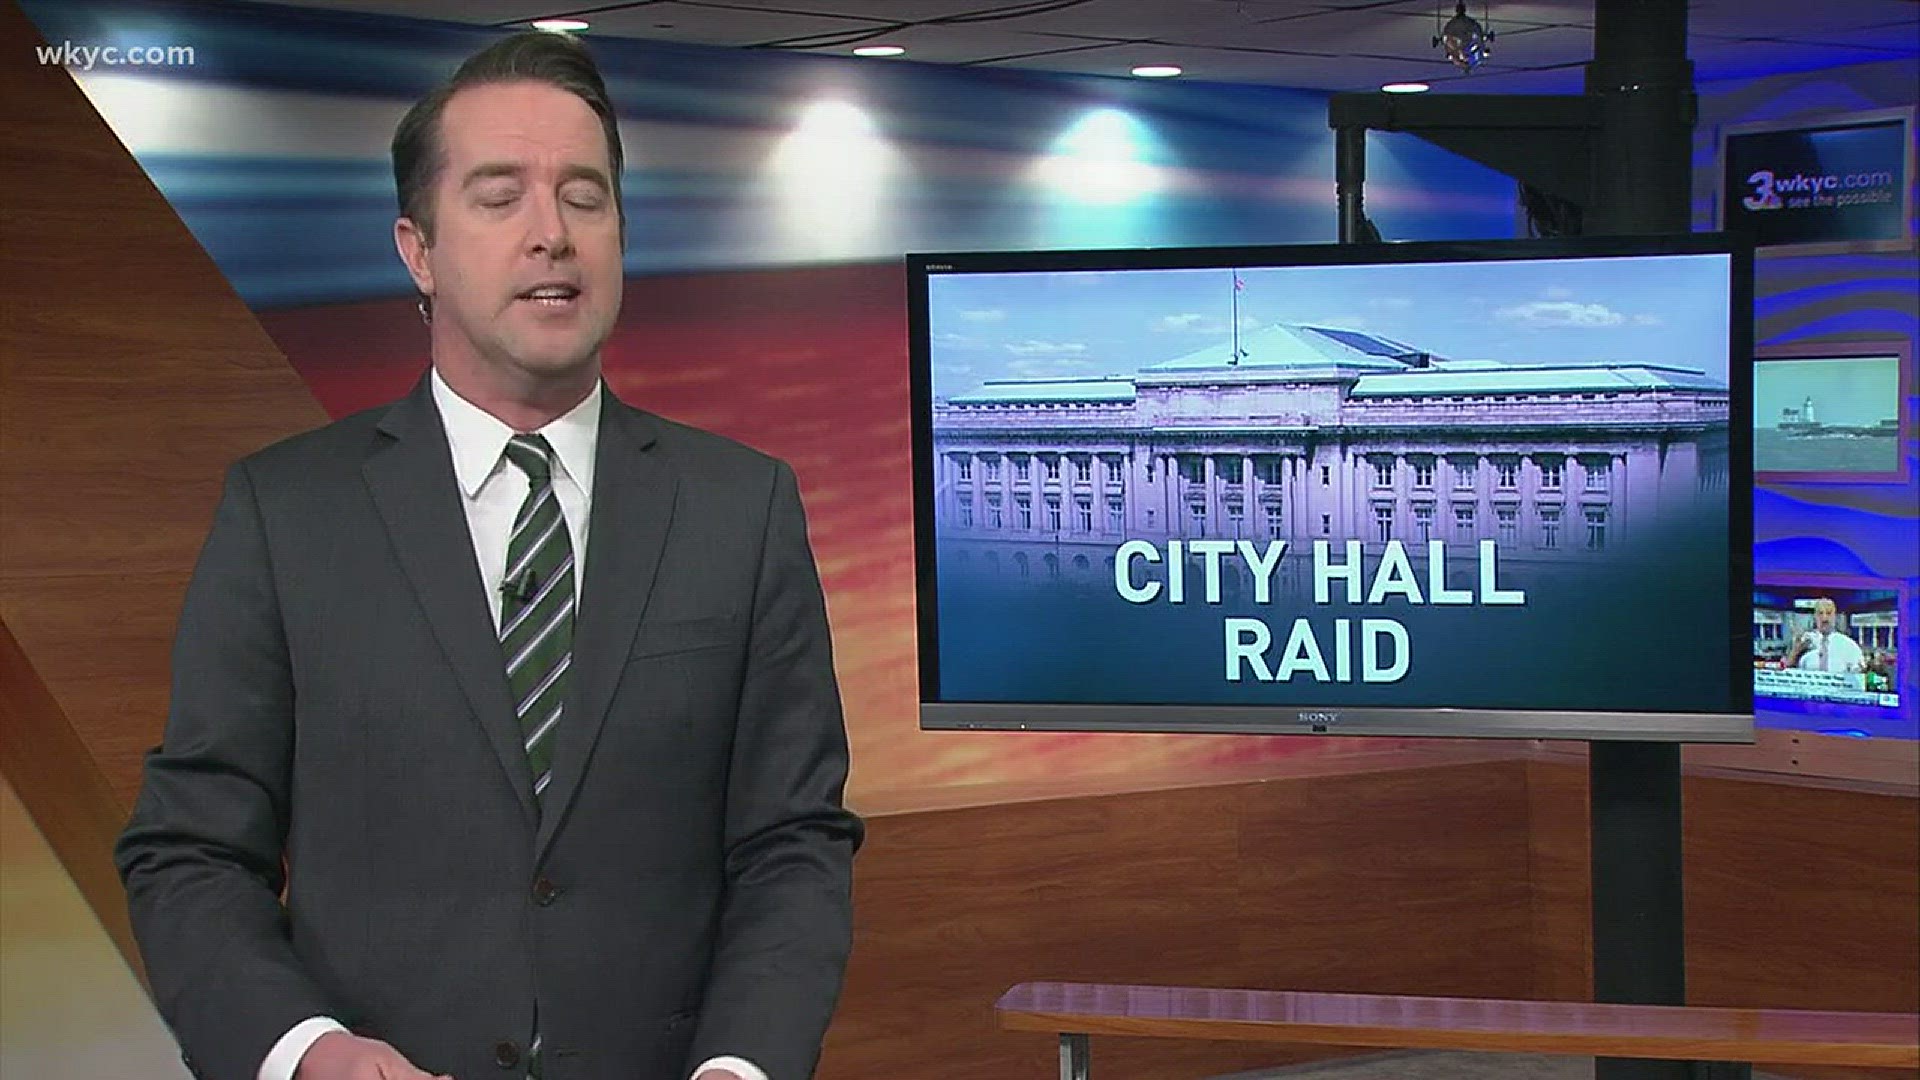 Chris Tye examines possible reasons for Wednesday night's City Hall raid